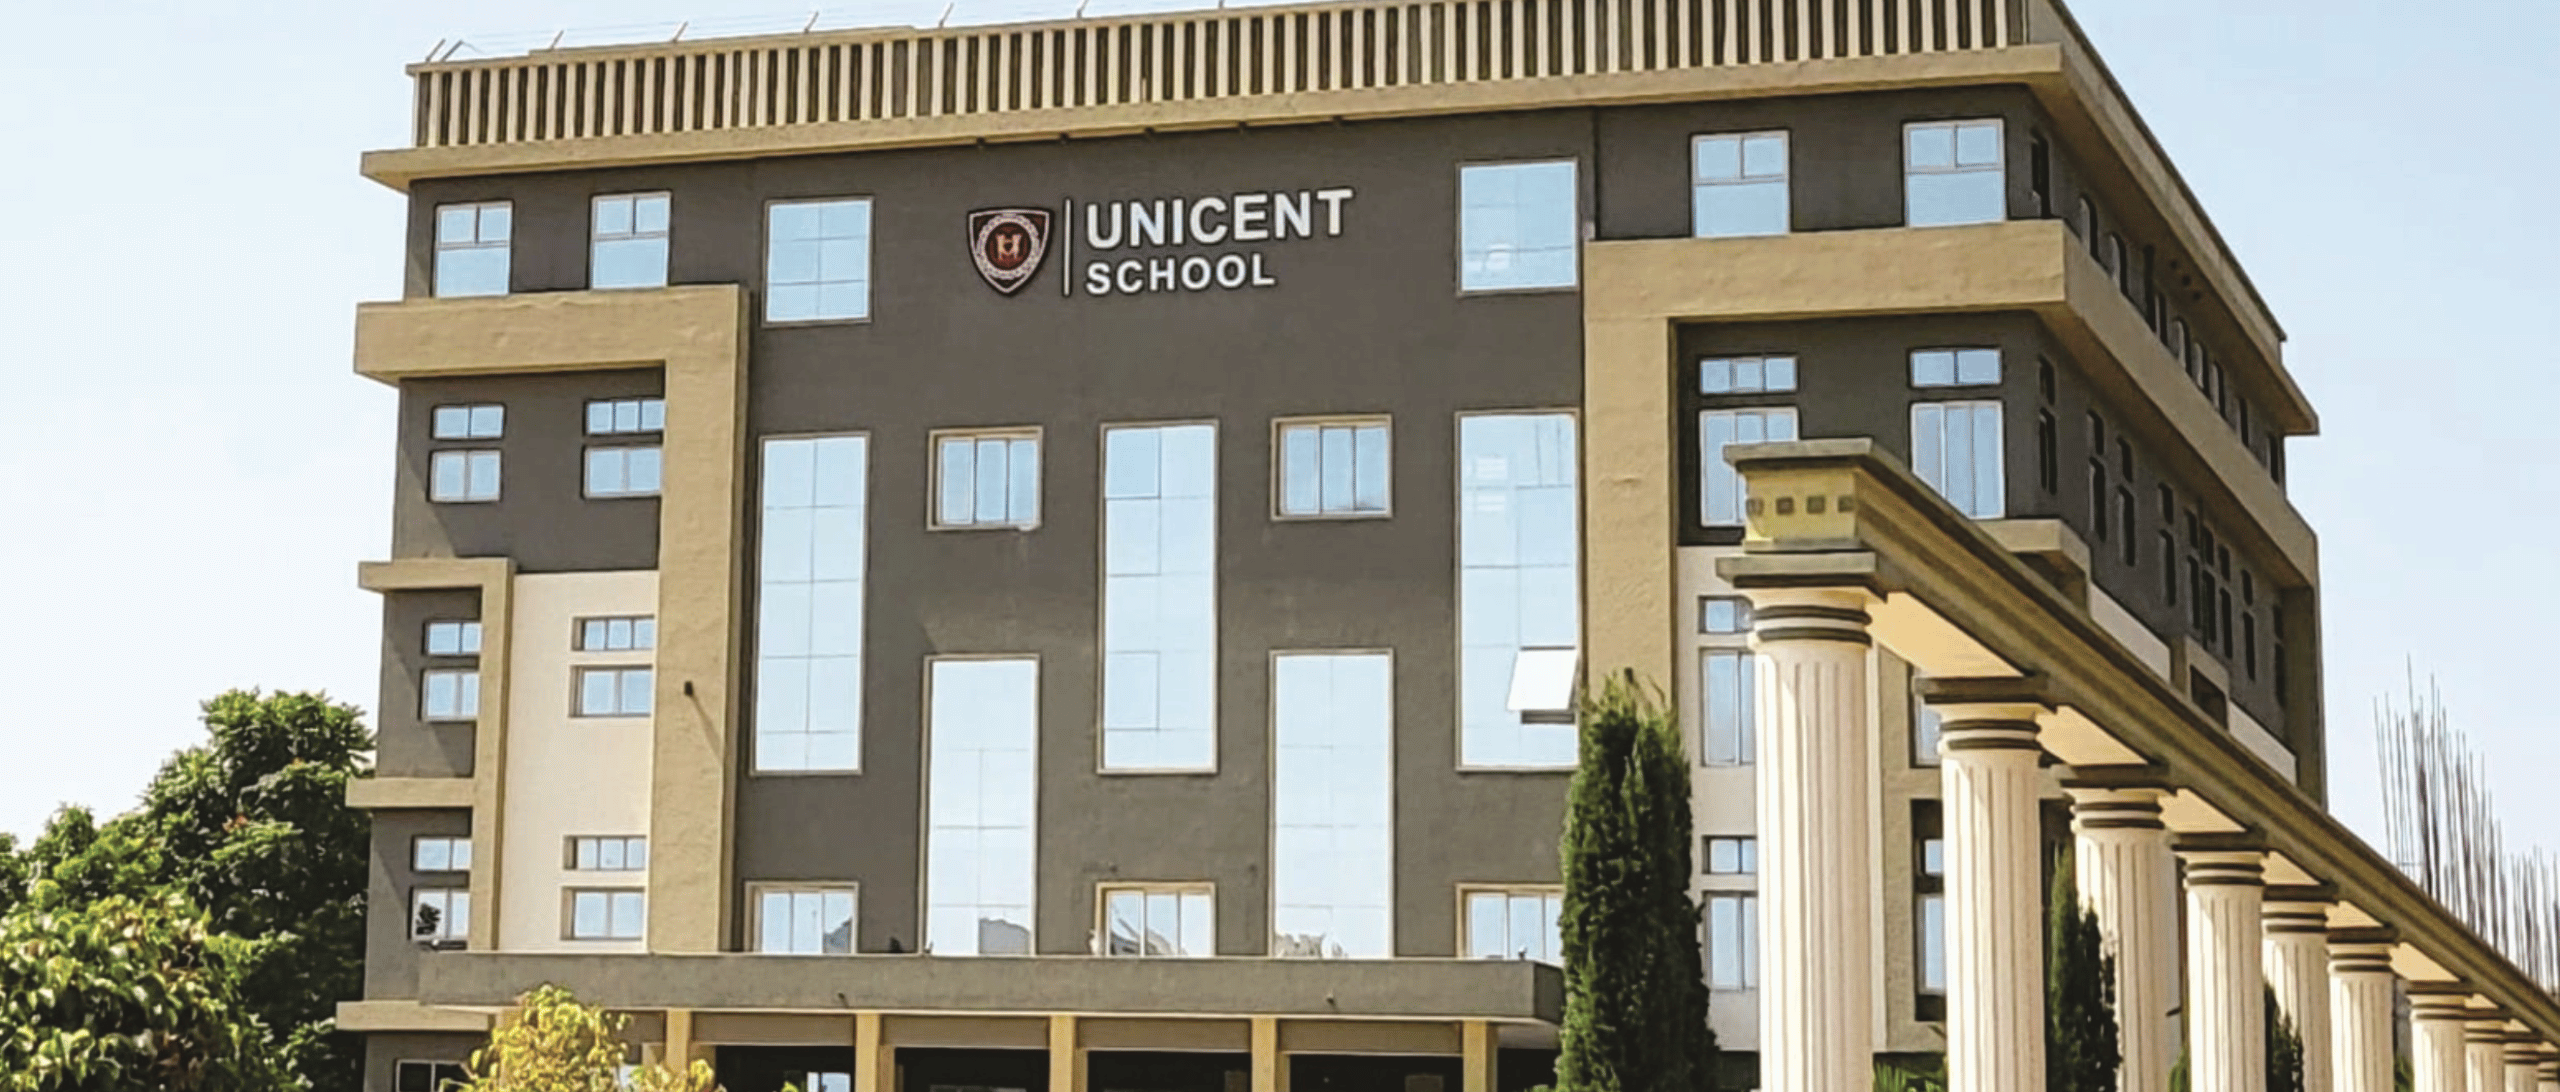 Unicent School